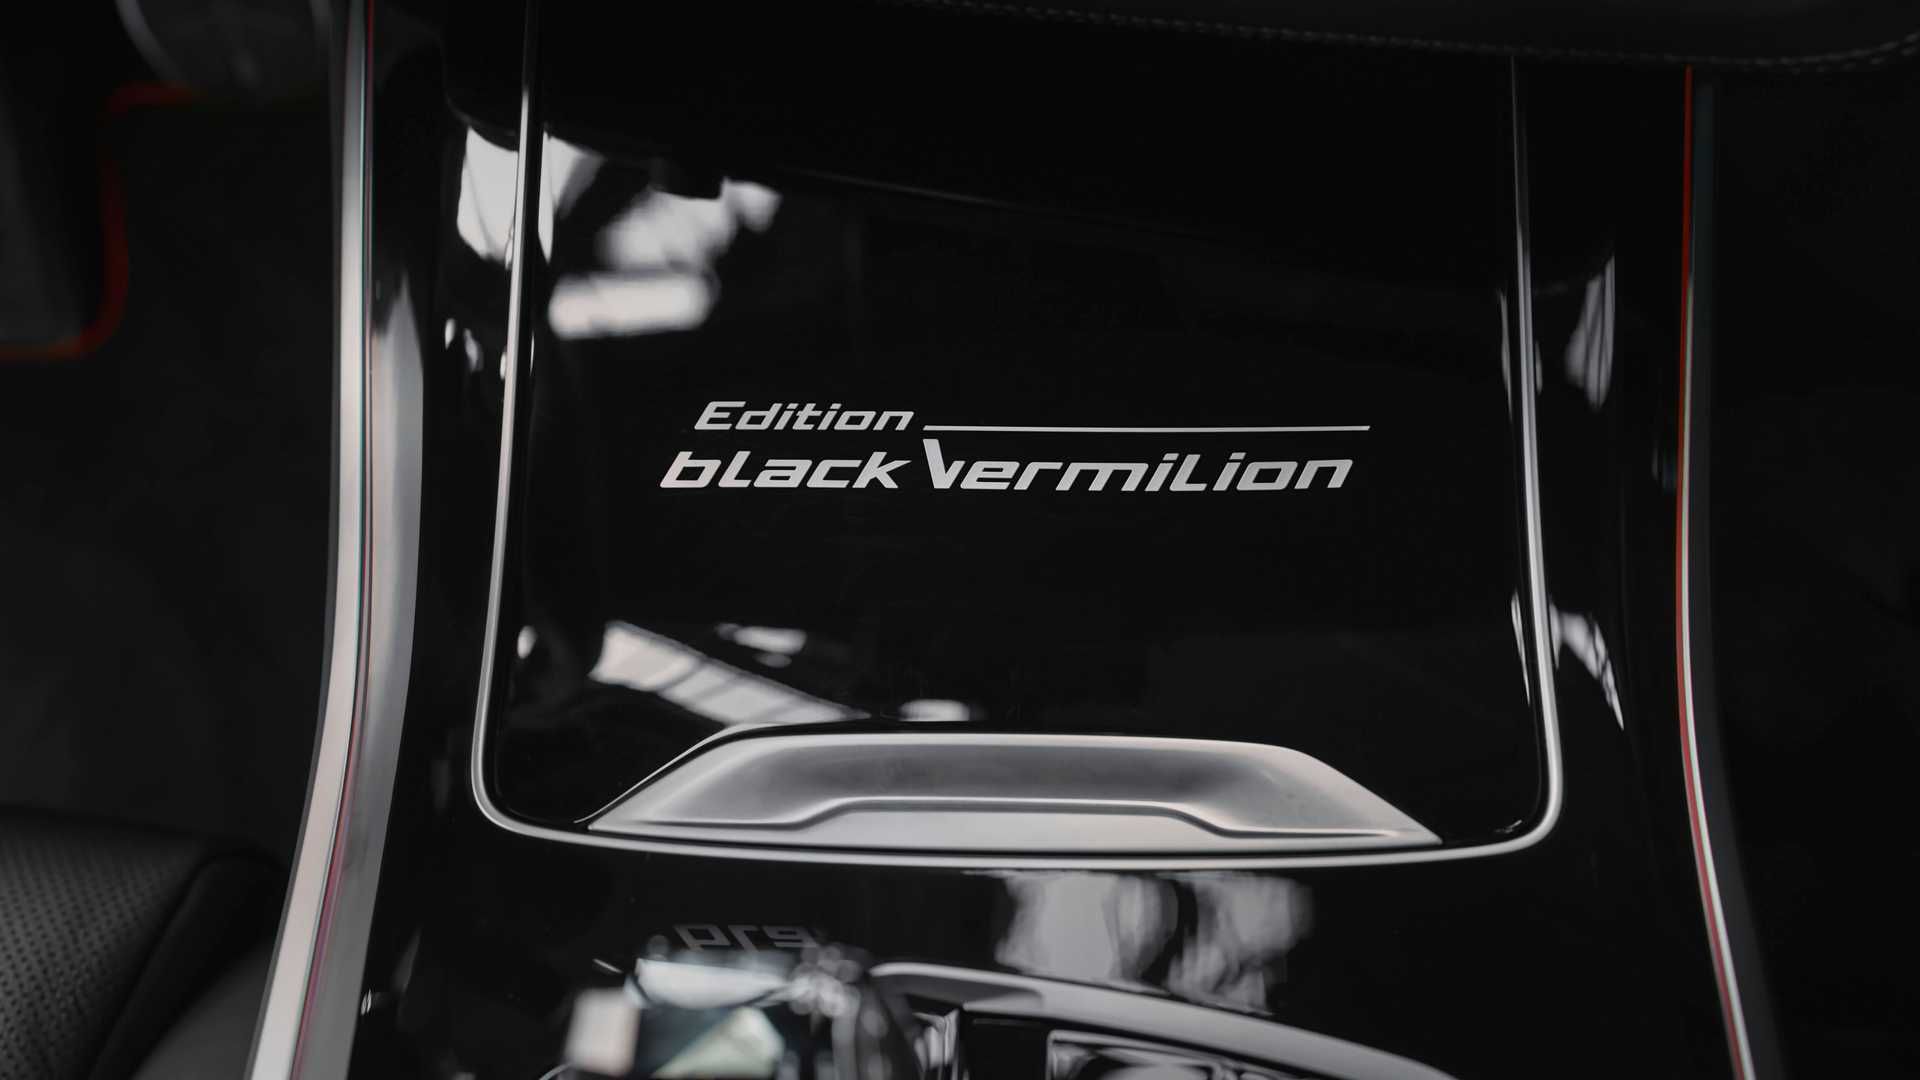 نشان بلک ورمیلیون روی بی ام و ایکس 5 نسخه بلک ورمیلیون / 2022 BMW X5 Black Vermilion